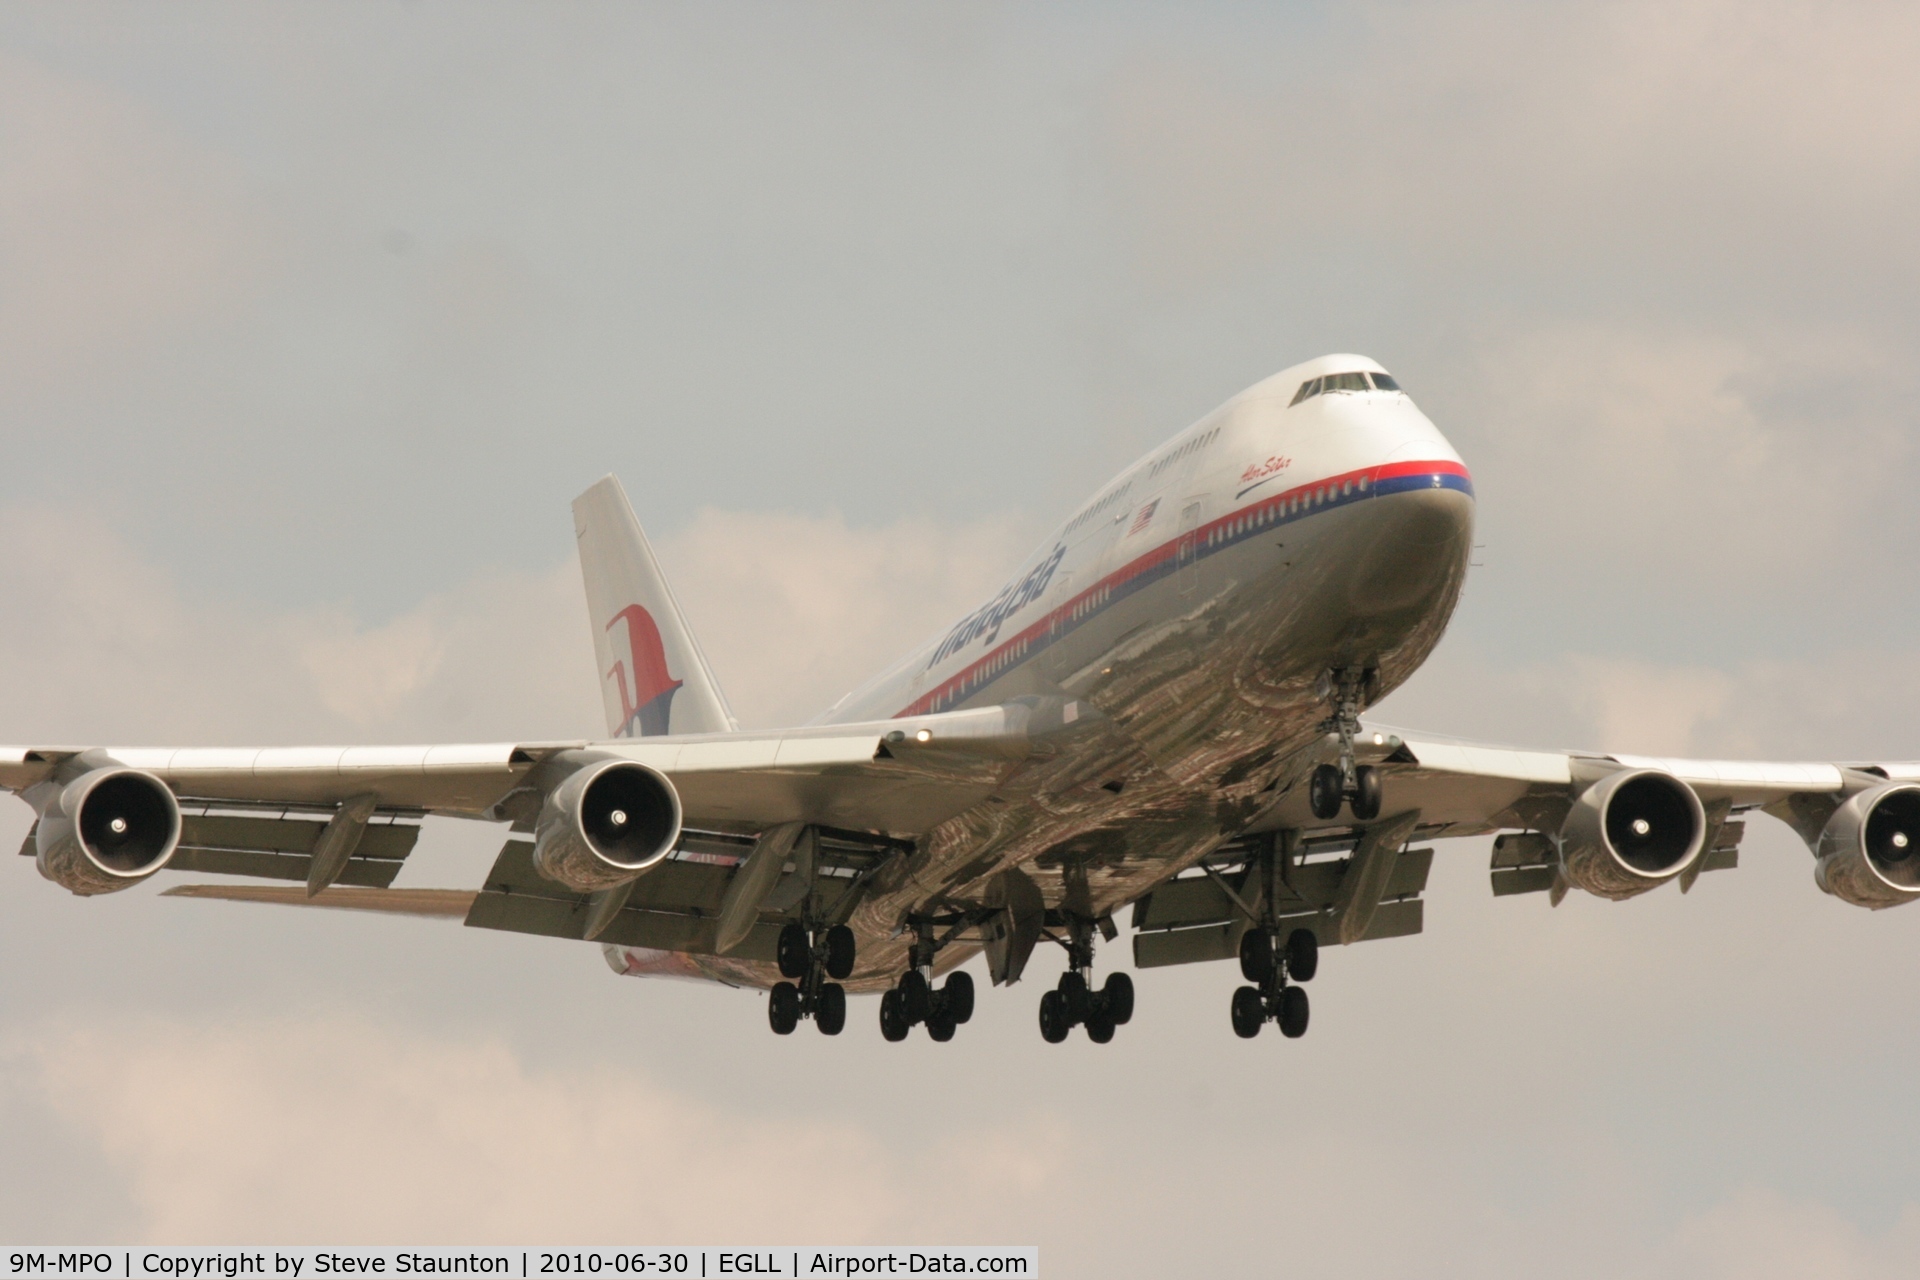 9M-MPO, 2001 Boeing 747-4H6 C/N 28433, Taken at Heathrow Airport, June 2010